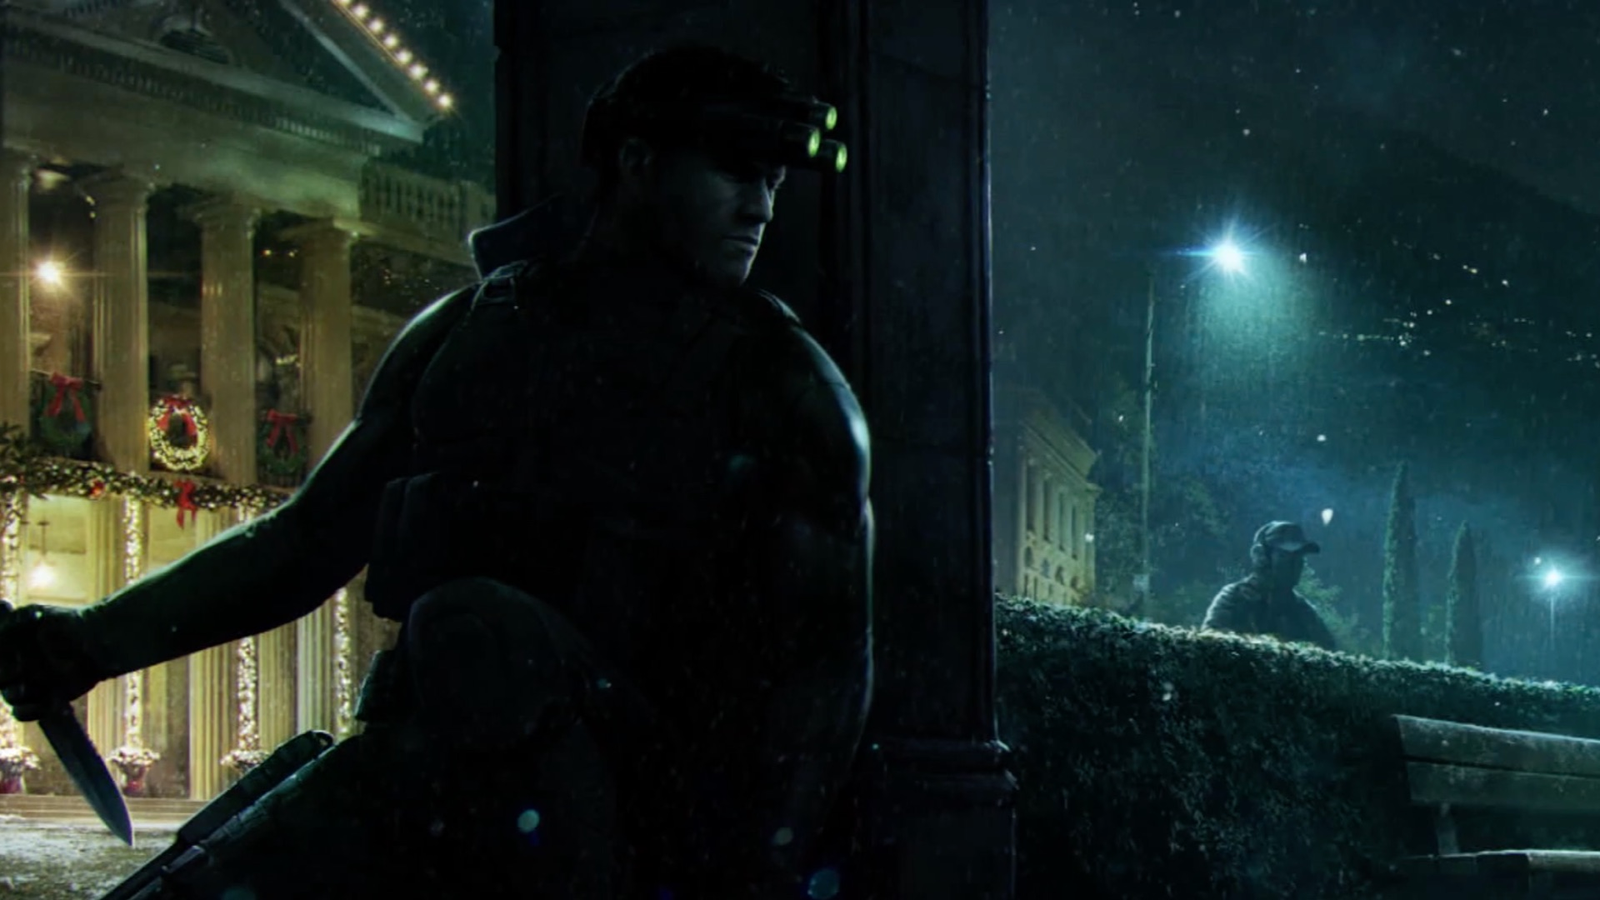 Splinter Cell' Remake Won't Be Open-World, Says Ubisoft